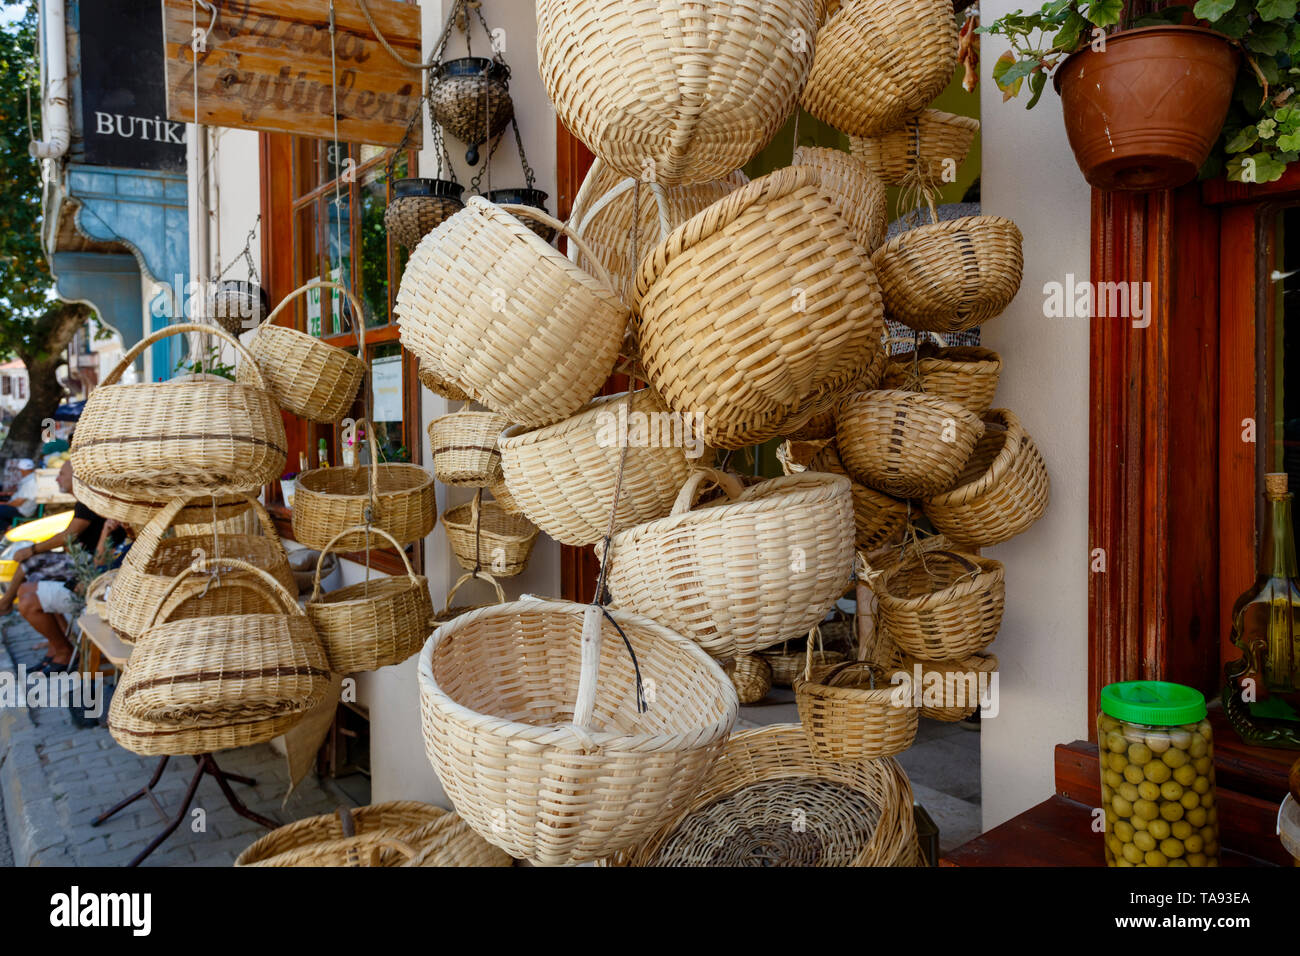 Rattan baskets, Tirilye, Marmara region, Turkey Stock Photo